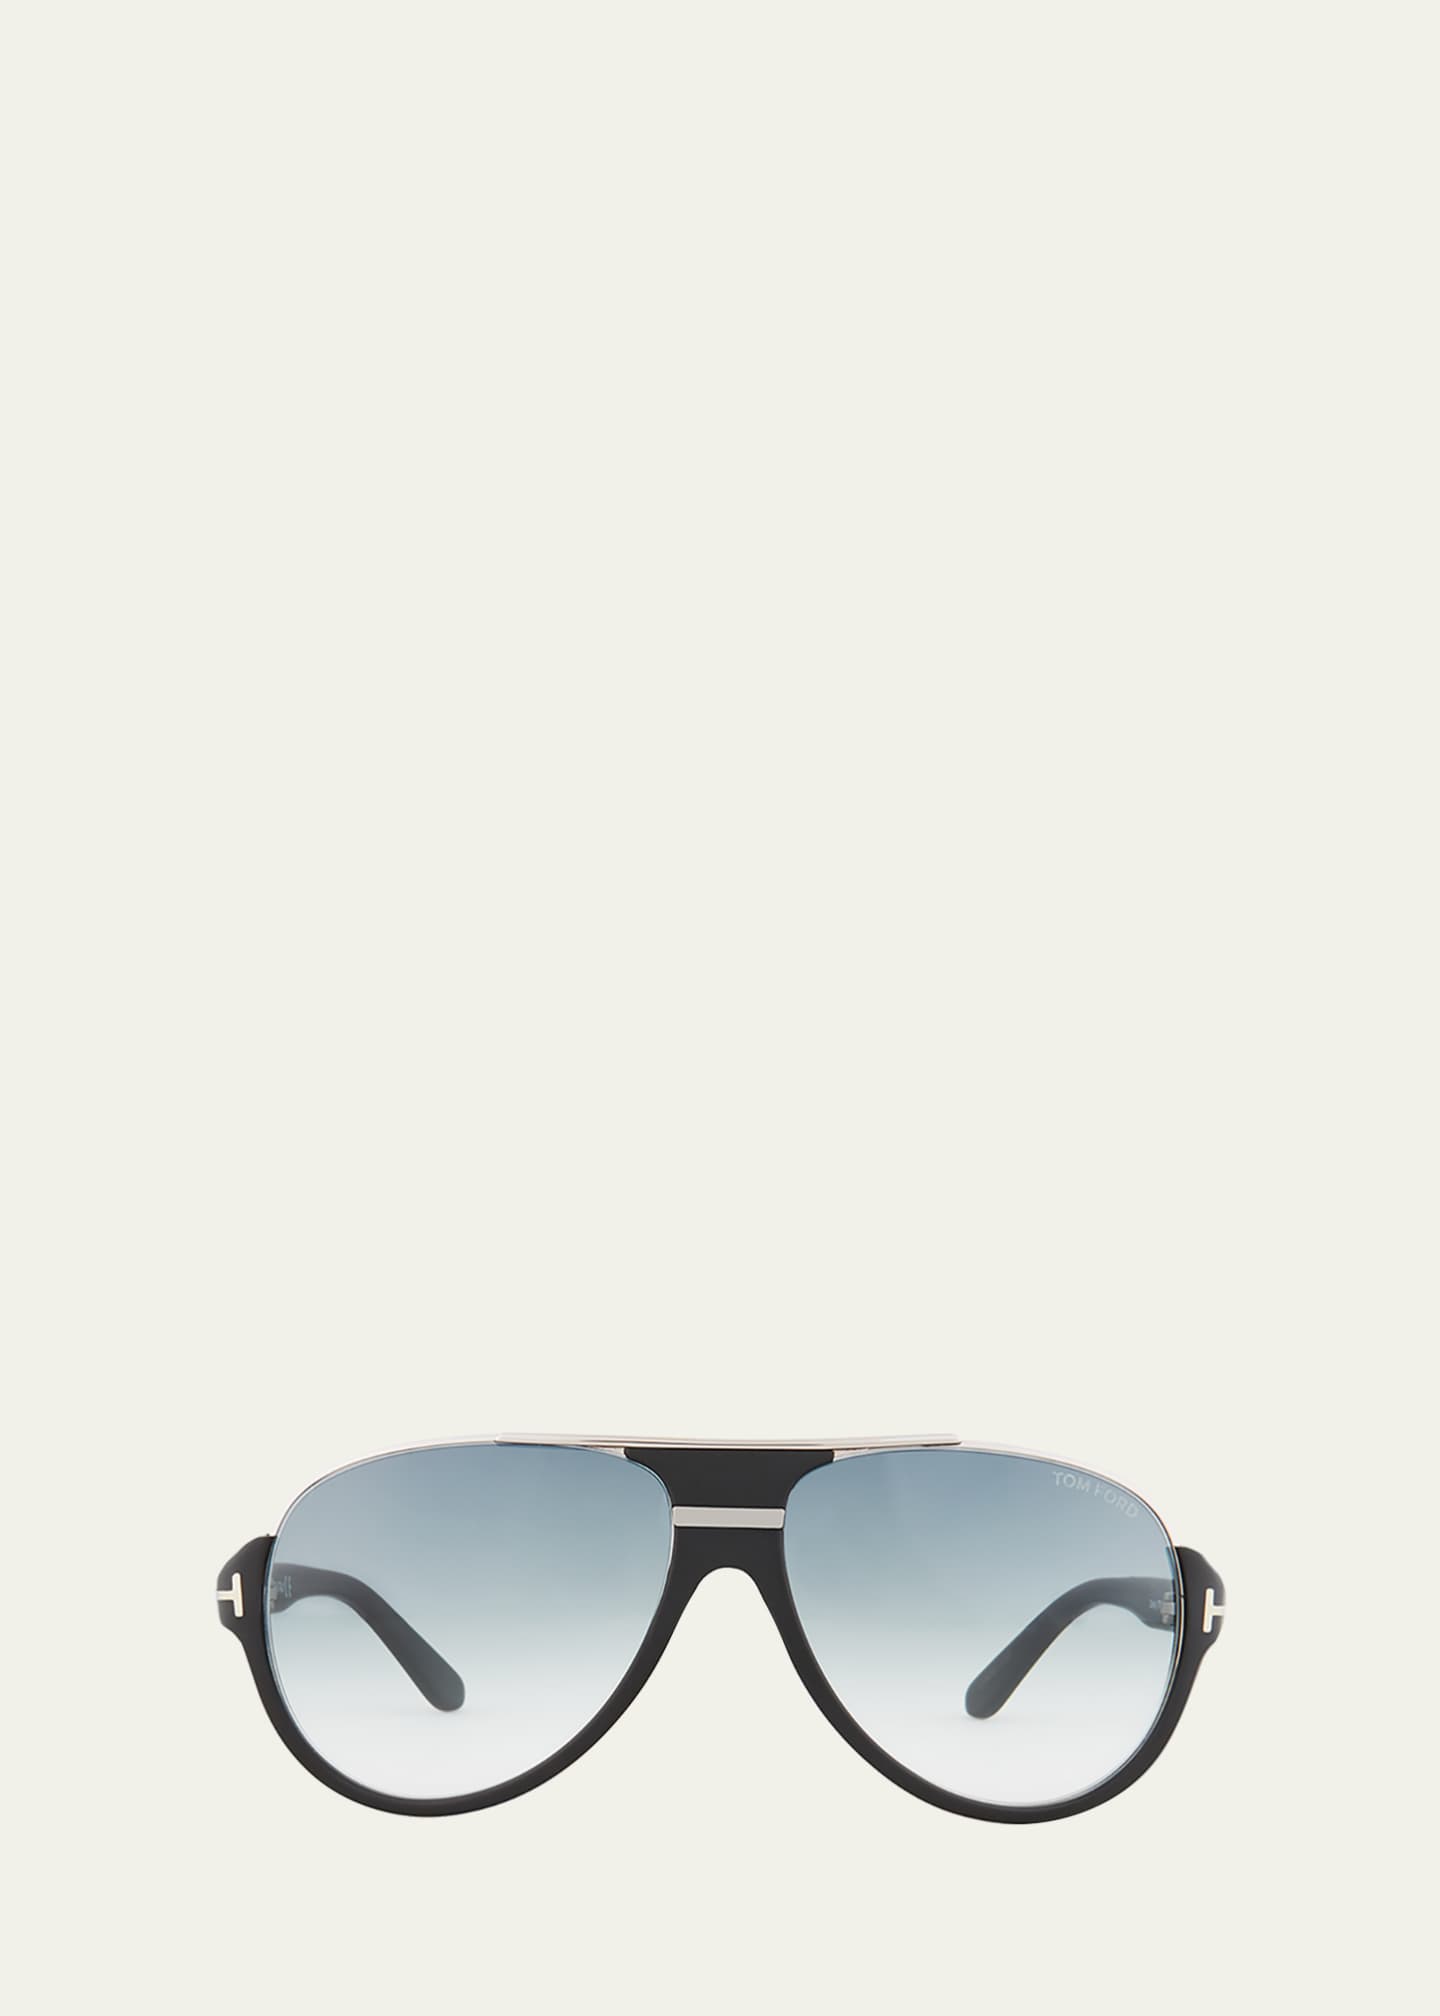 TOM FORD Dimitry Half-Rim Aviator Sunglasses, Matte Black/Shiny Dark ...